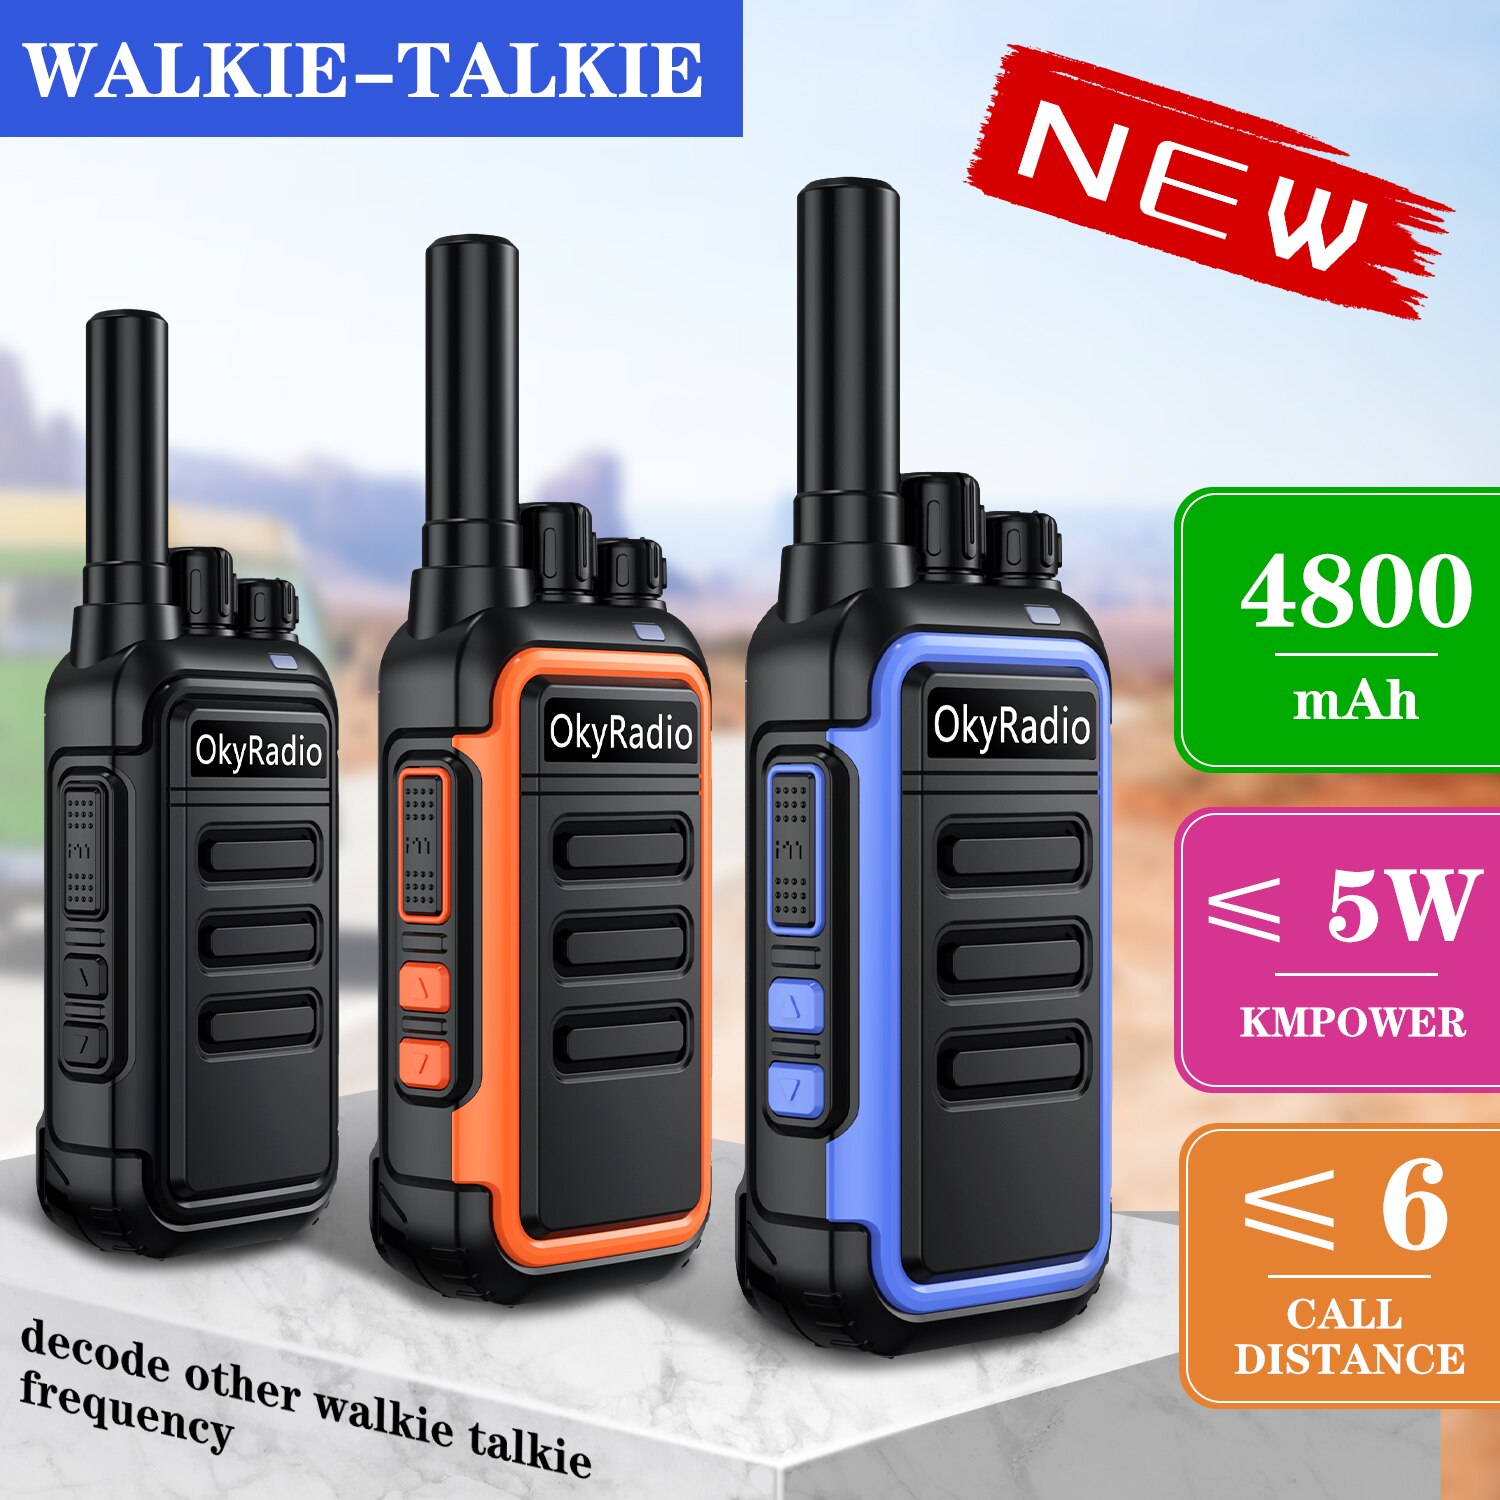 Work Walkie-talkie 6km Call 4800mAh Battery 5w Power OkyRadio Portable Waterproof Walkie-talkie Strong Anti